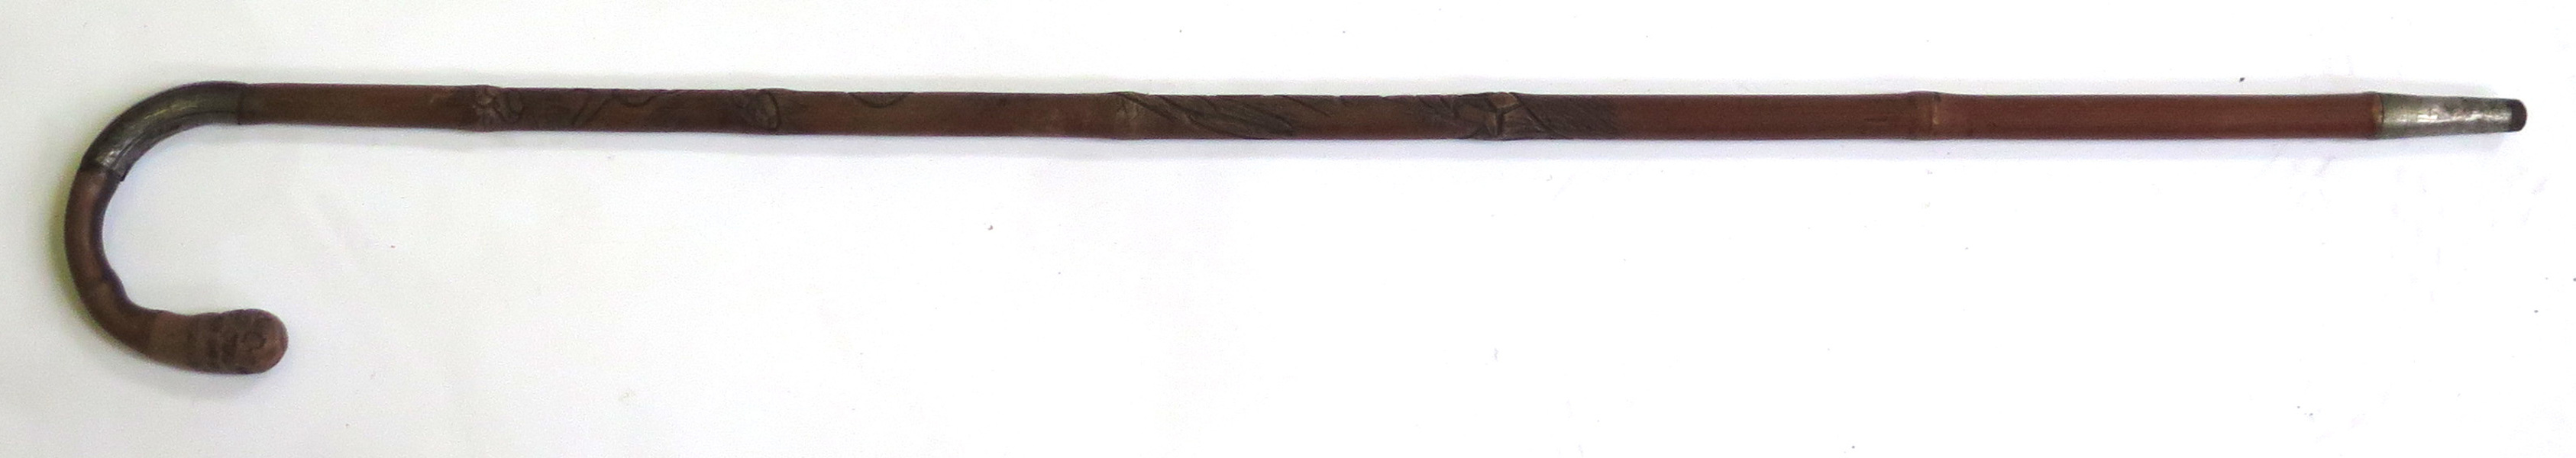 Käpp, bambu med silver(?)montage, antagligen Kina, sekelskiftet 1900,_16359a_lg.jpeg